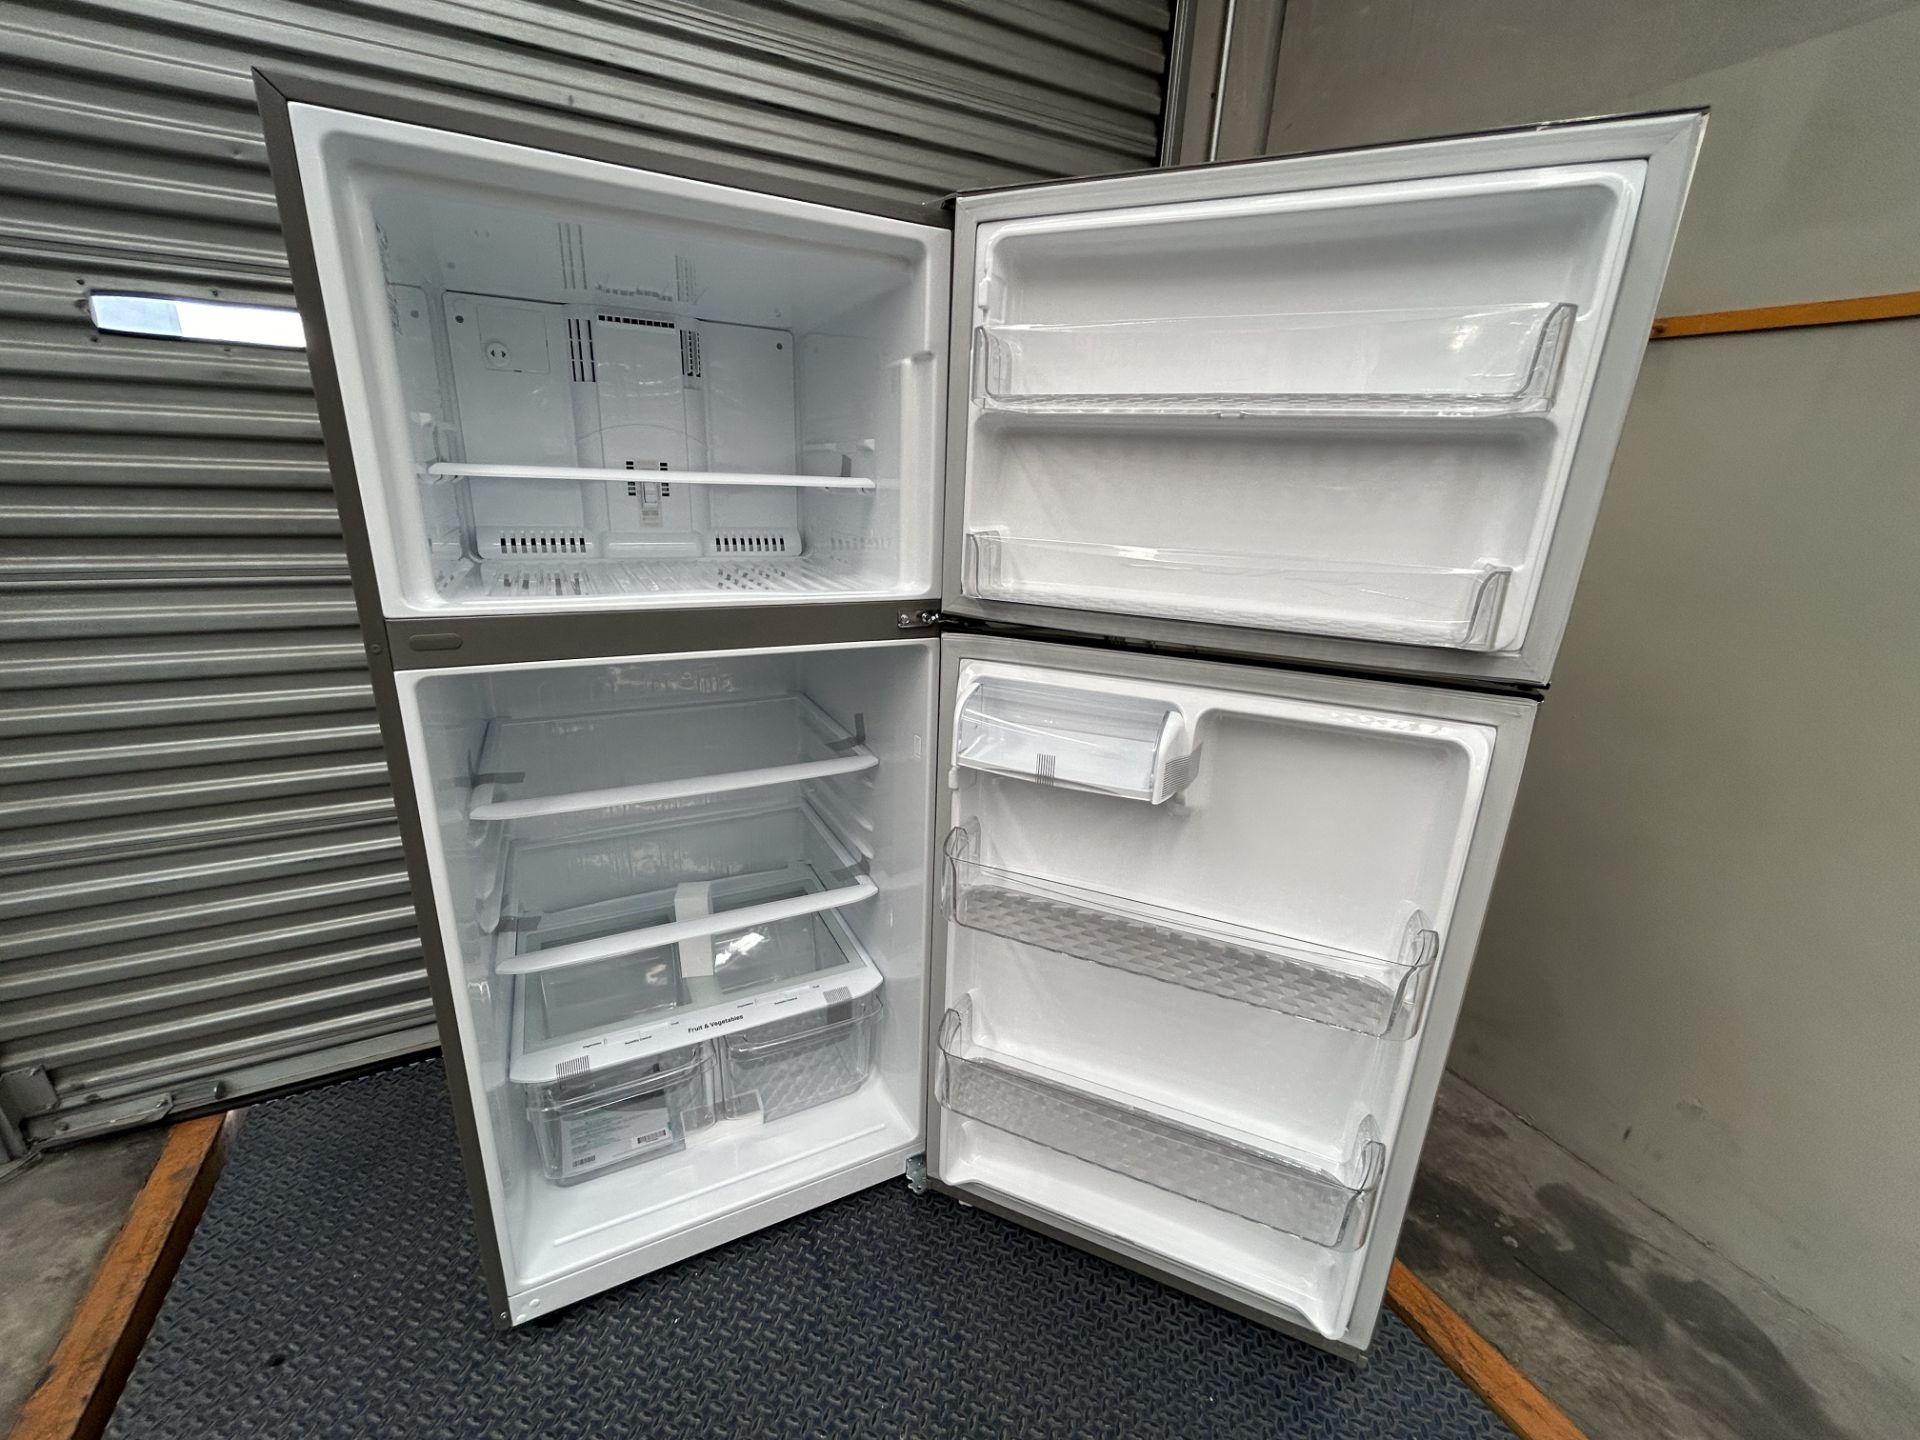 (NUEVO) Lote de 1 Refrigerador Marca LG, Modelo LT57BPSX, Serie 0C217, Color GRIS - Image 4 of 5